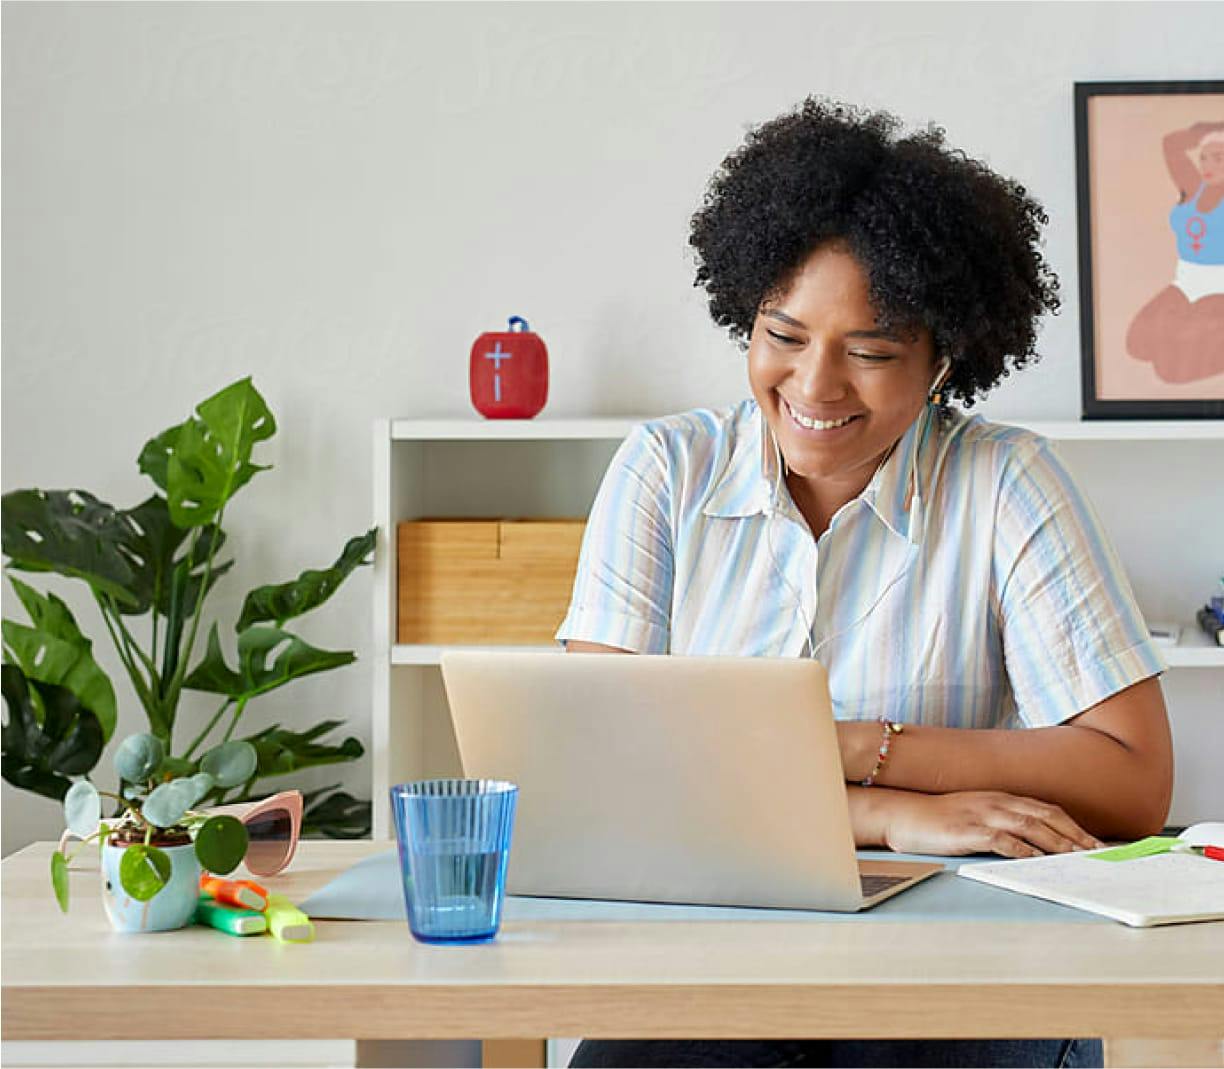 Smiling woman wearing earphones sitting at computer